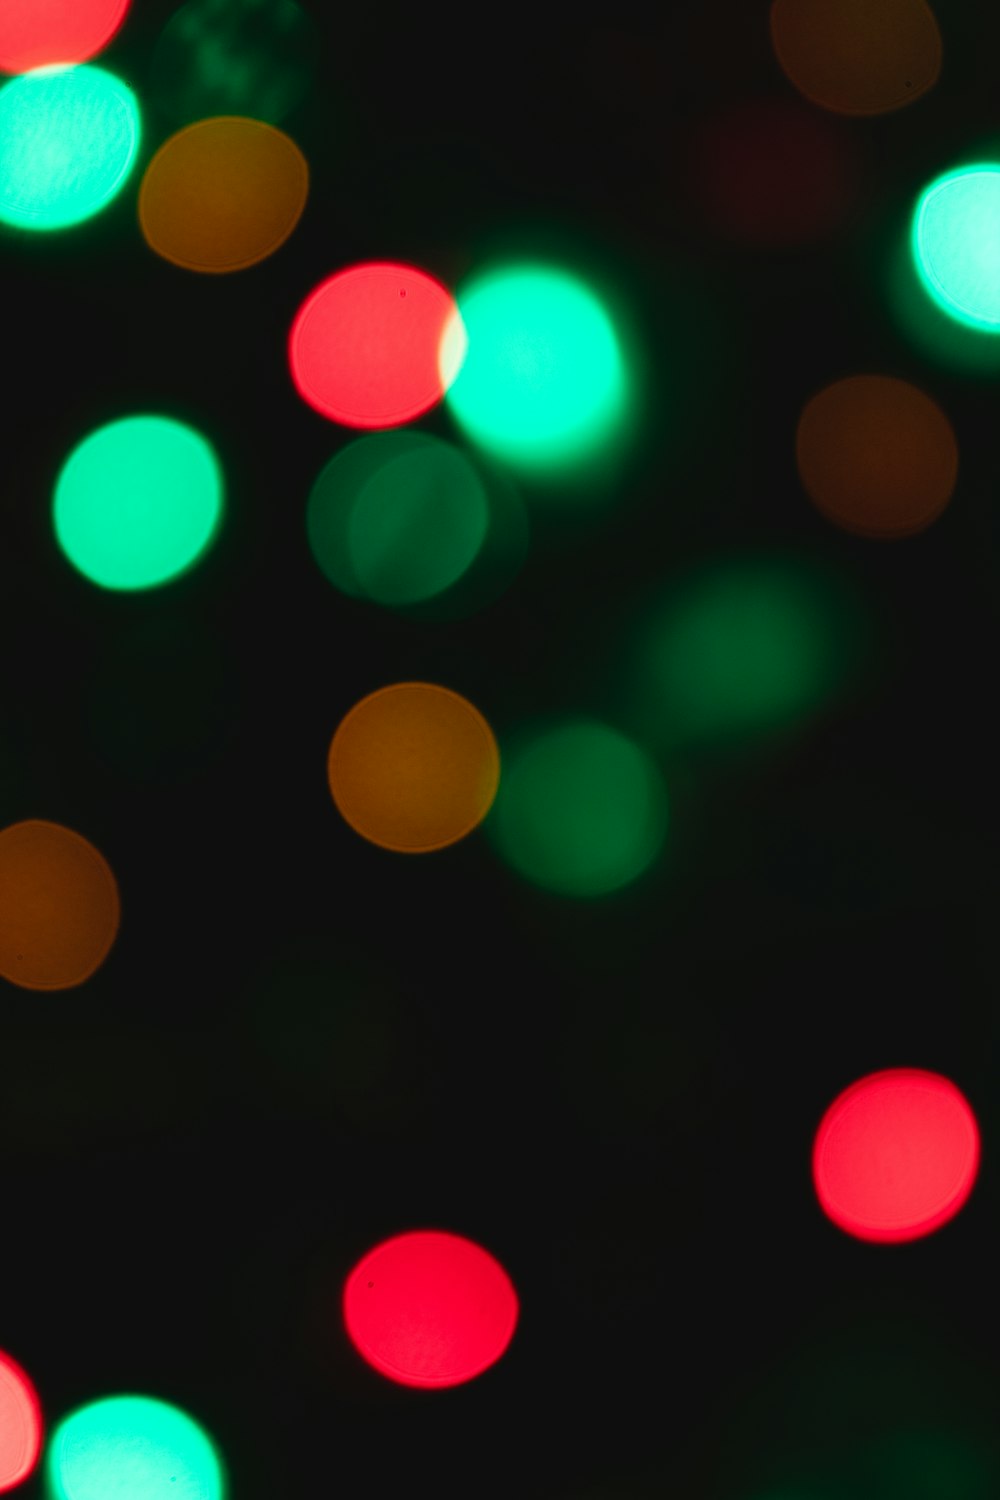 Una foto borrosa de muchas luces de diferentes colores